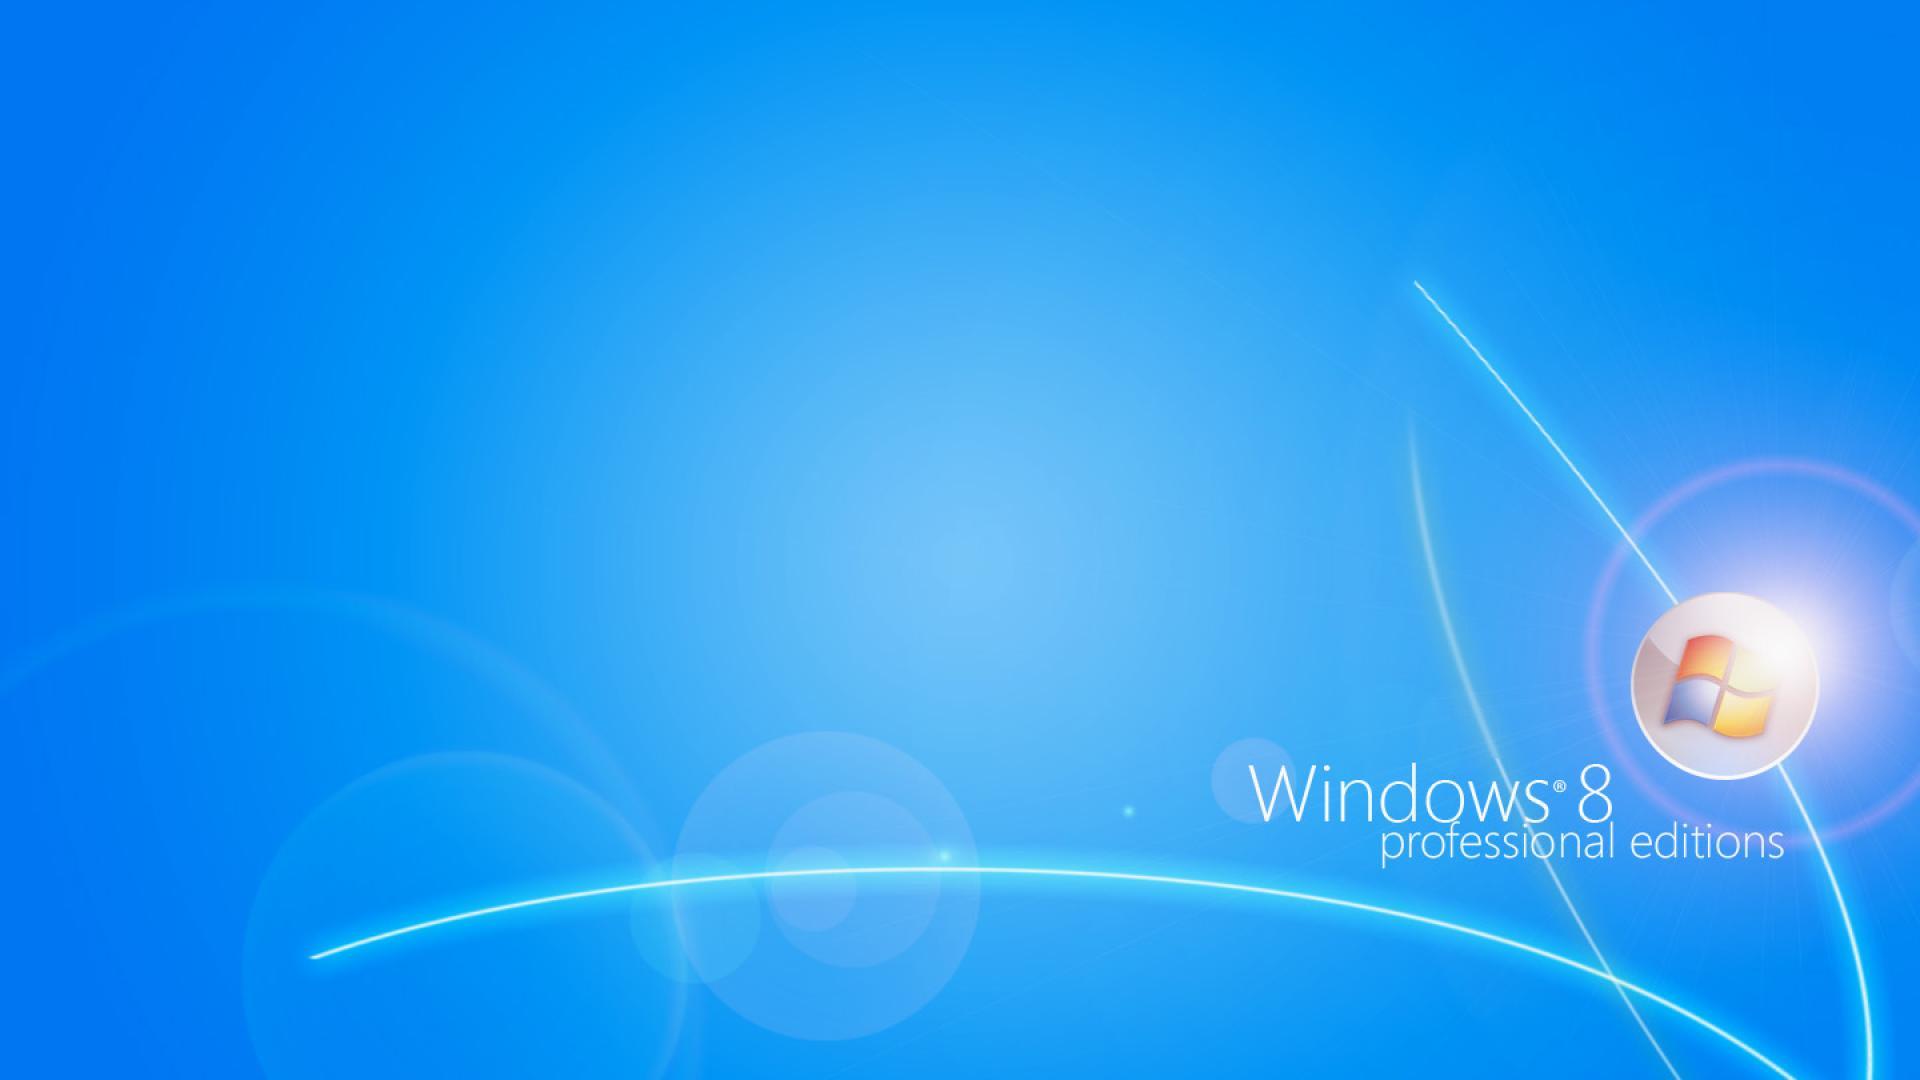 Wallpaper For > Windows 8 Pro Wallpaper HD 1080p